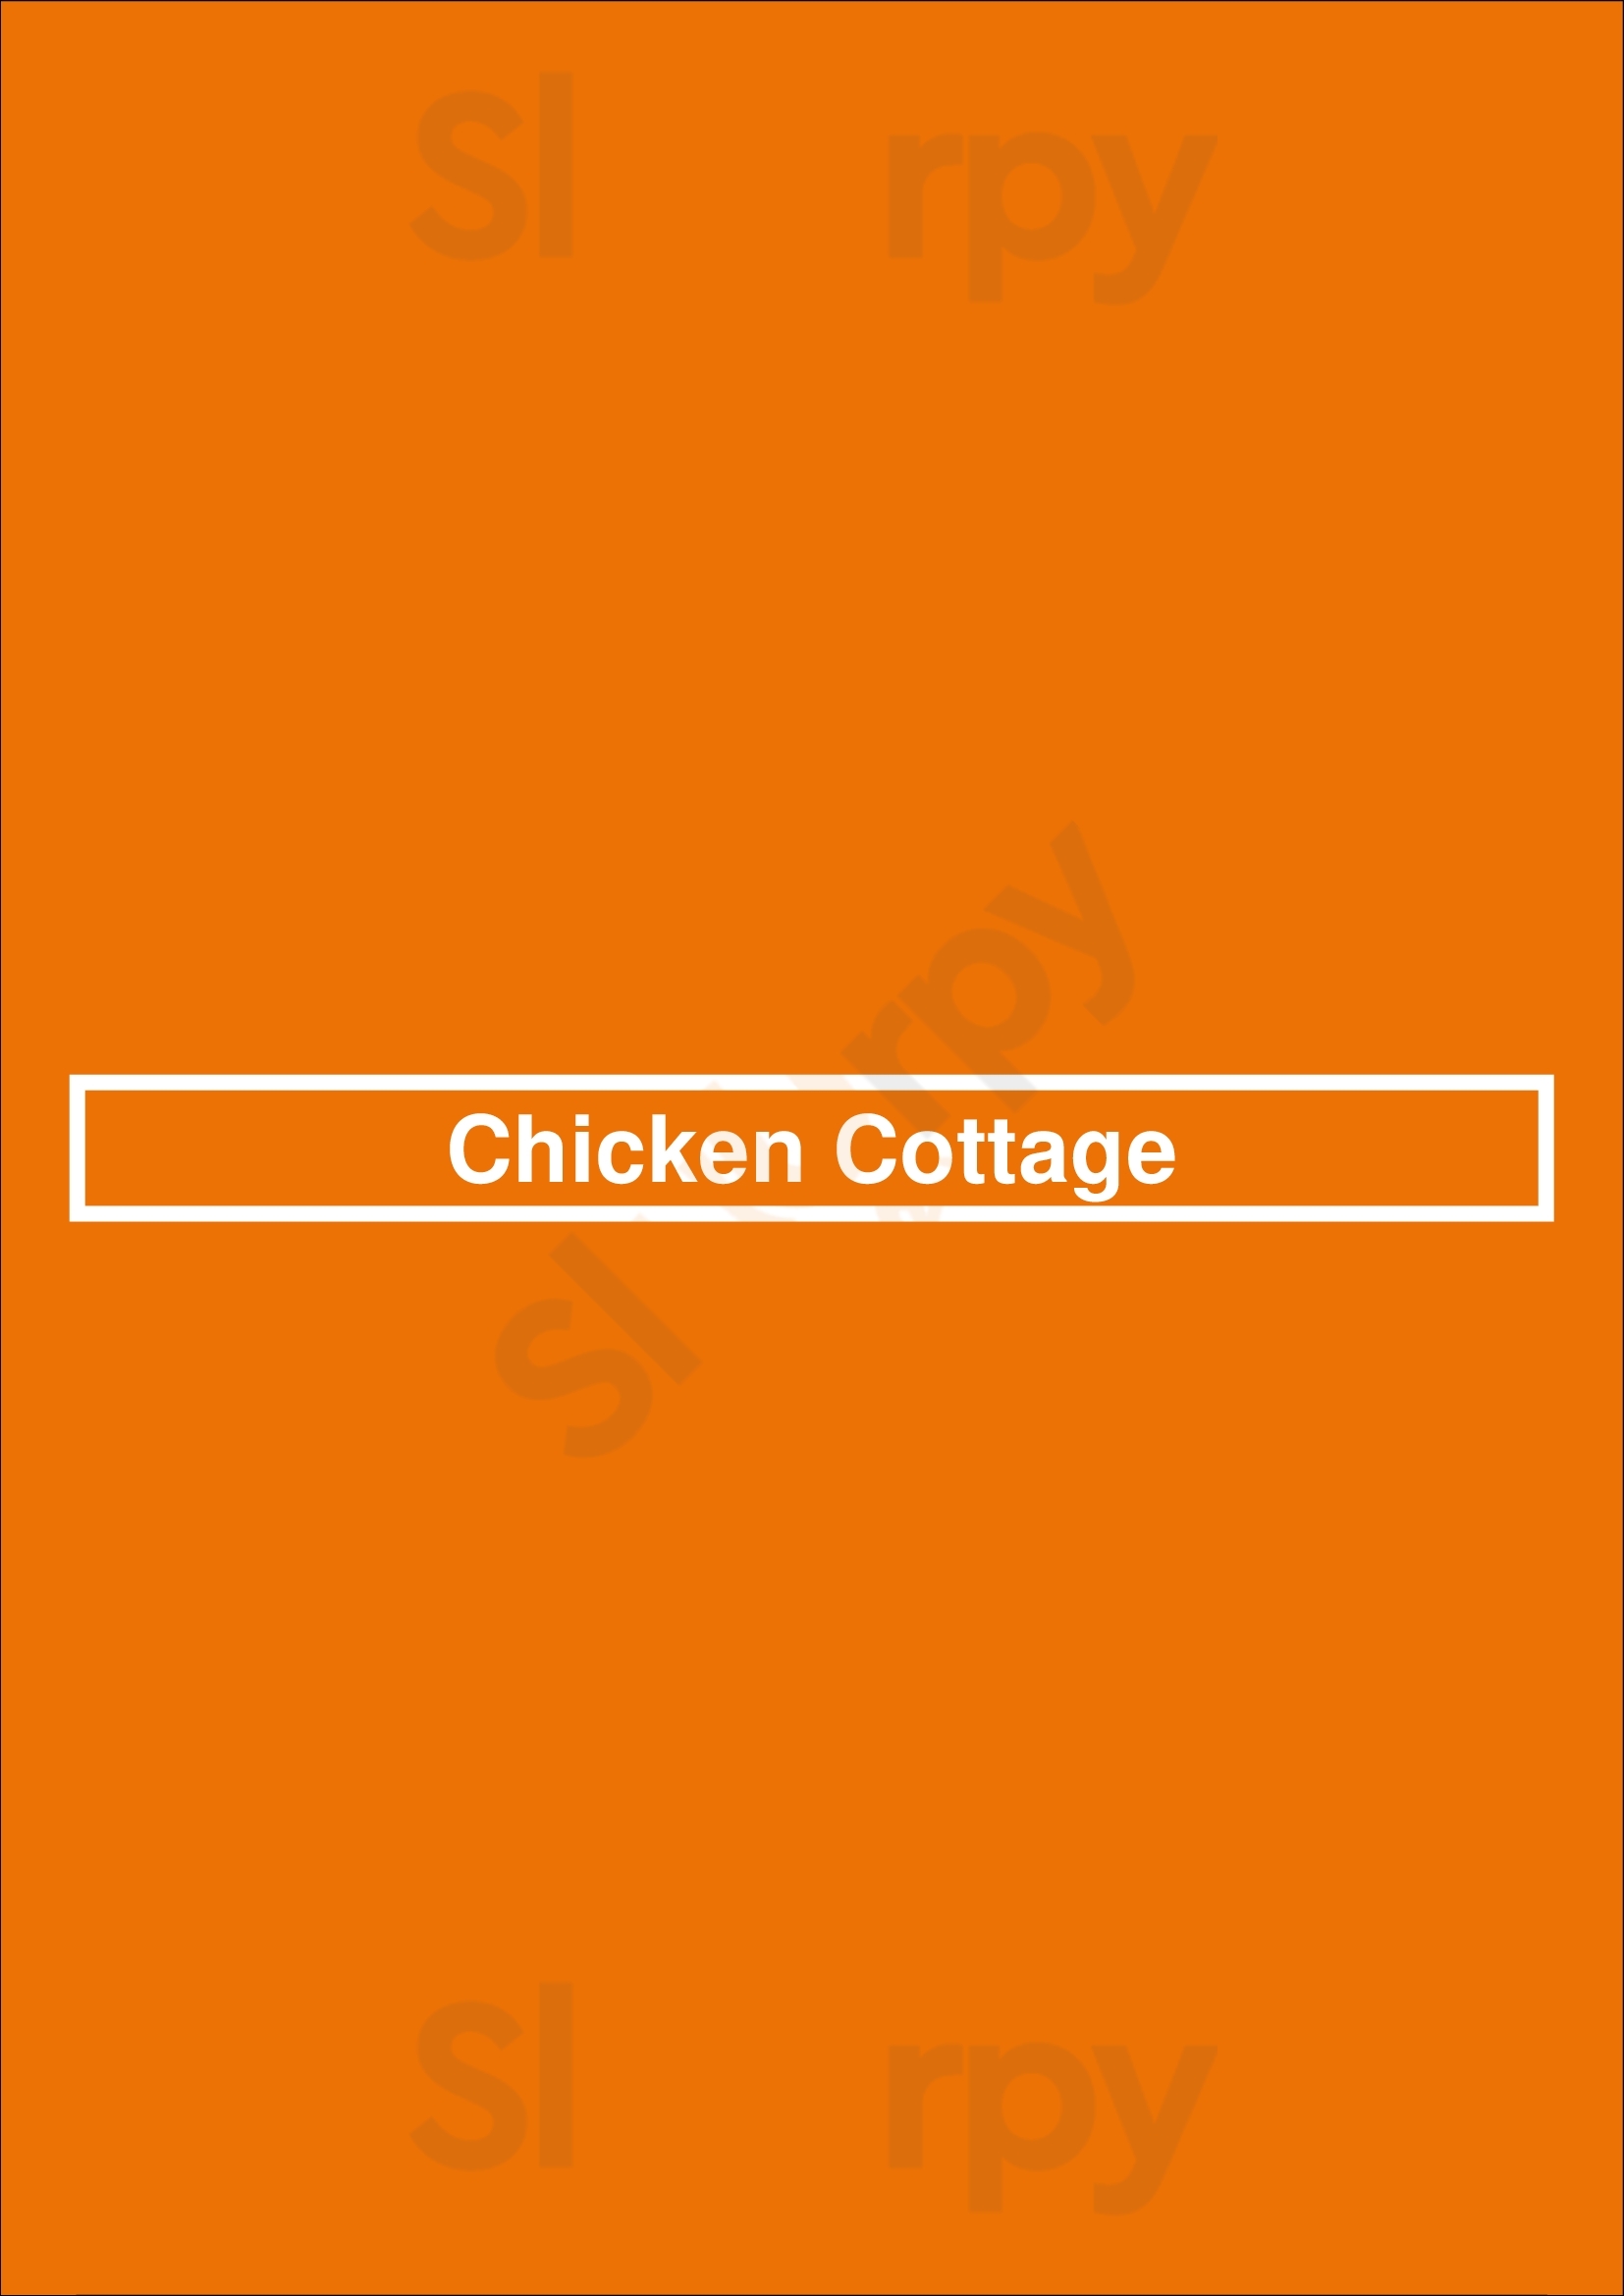 Chicken Cottage Newcastle upon Tyne Menu - 1